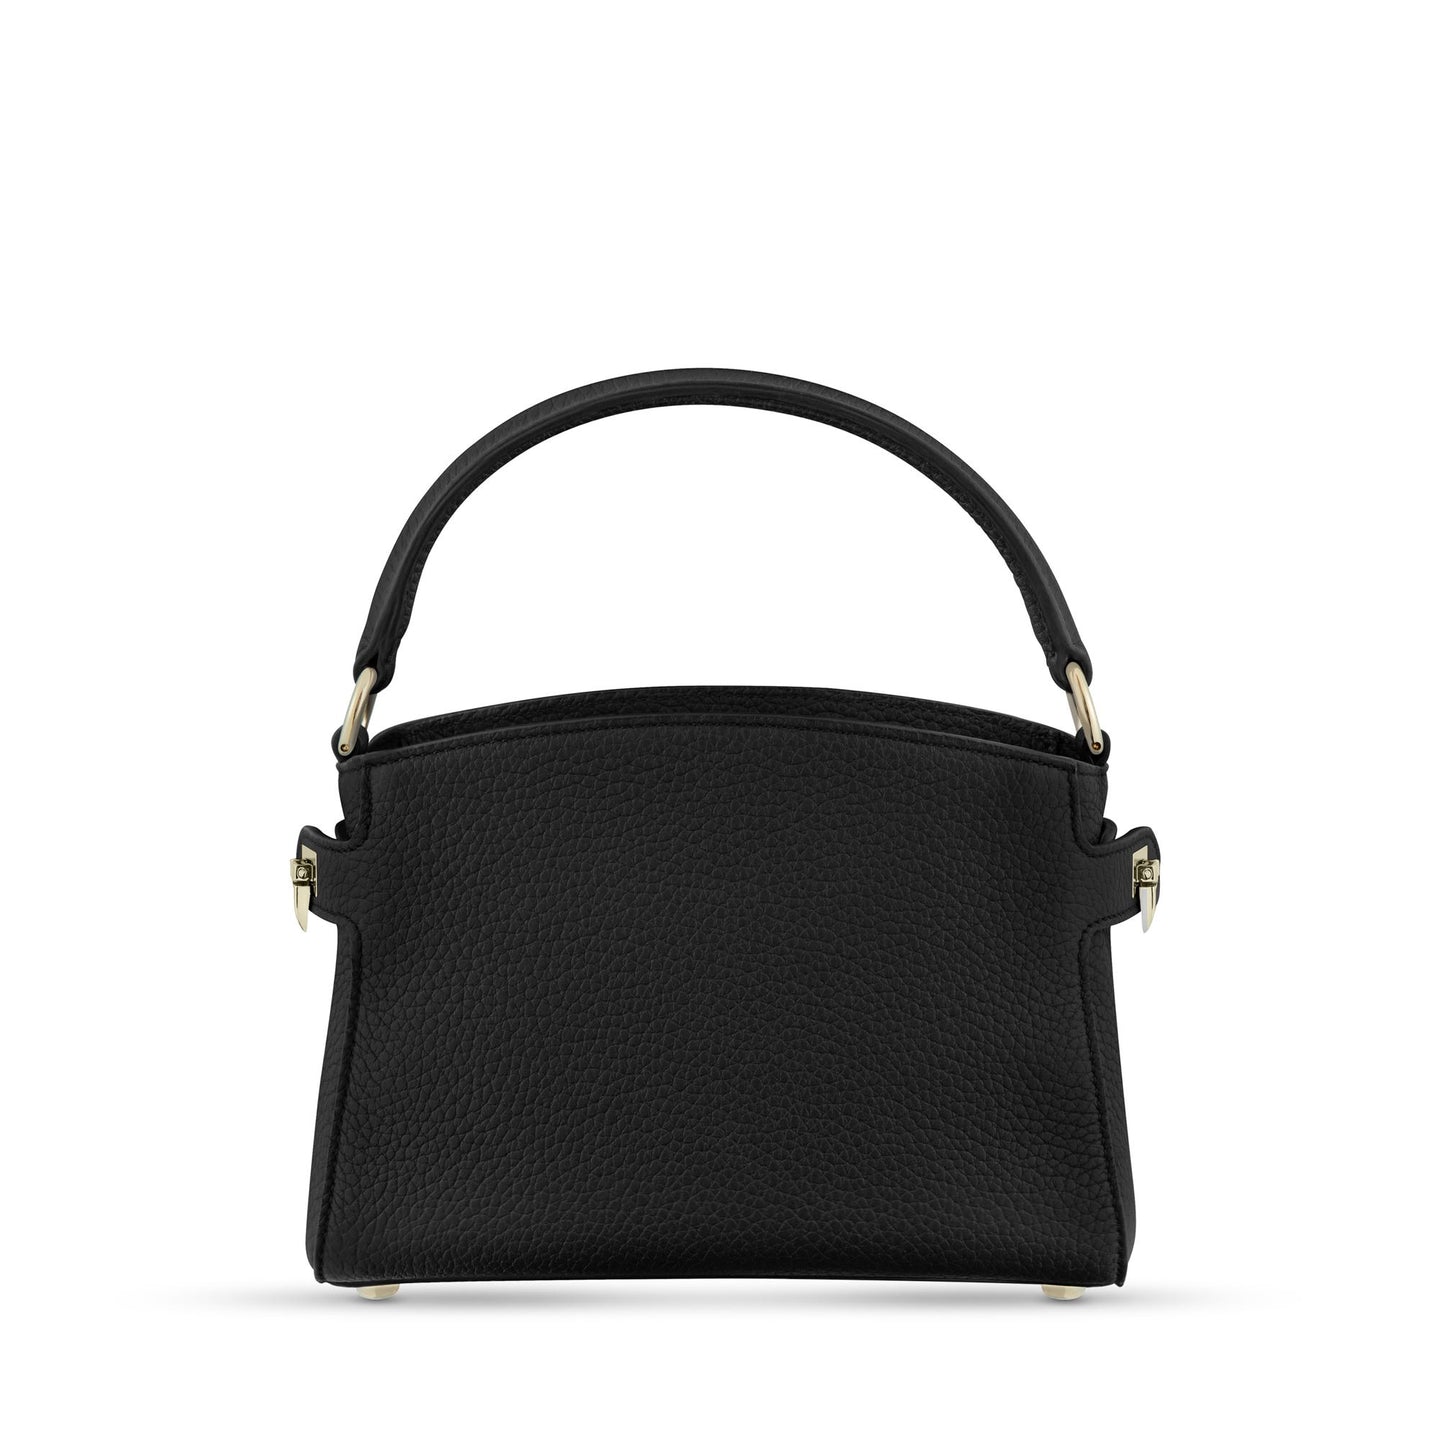 Taylor Top Handle Mini Handbag in Soft Grain Leather